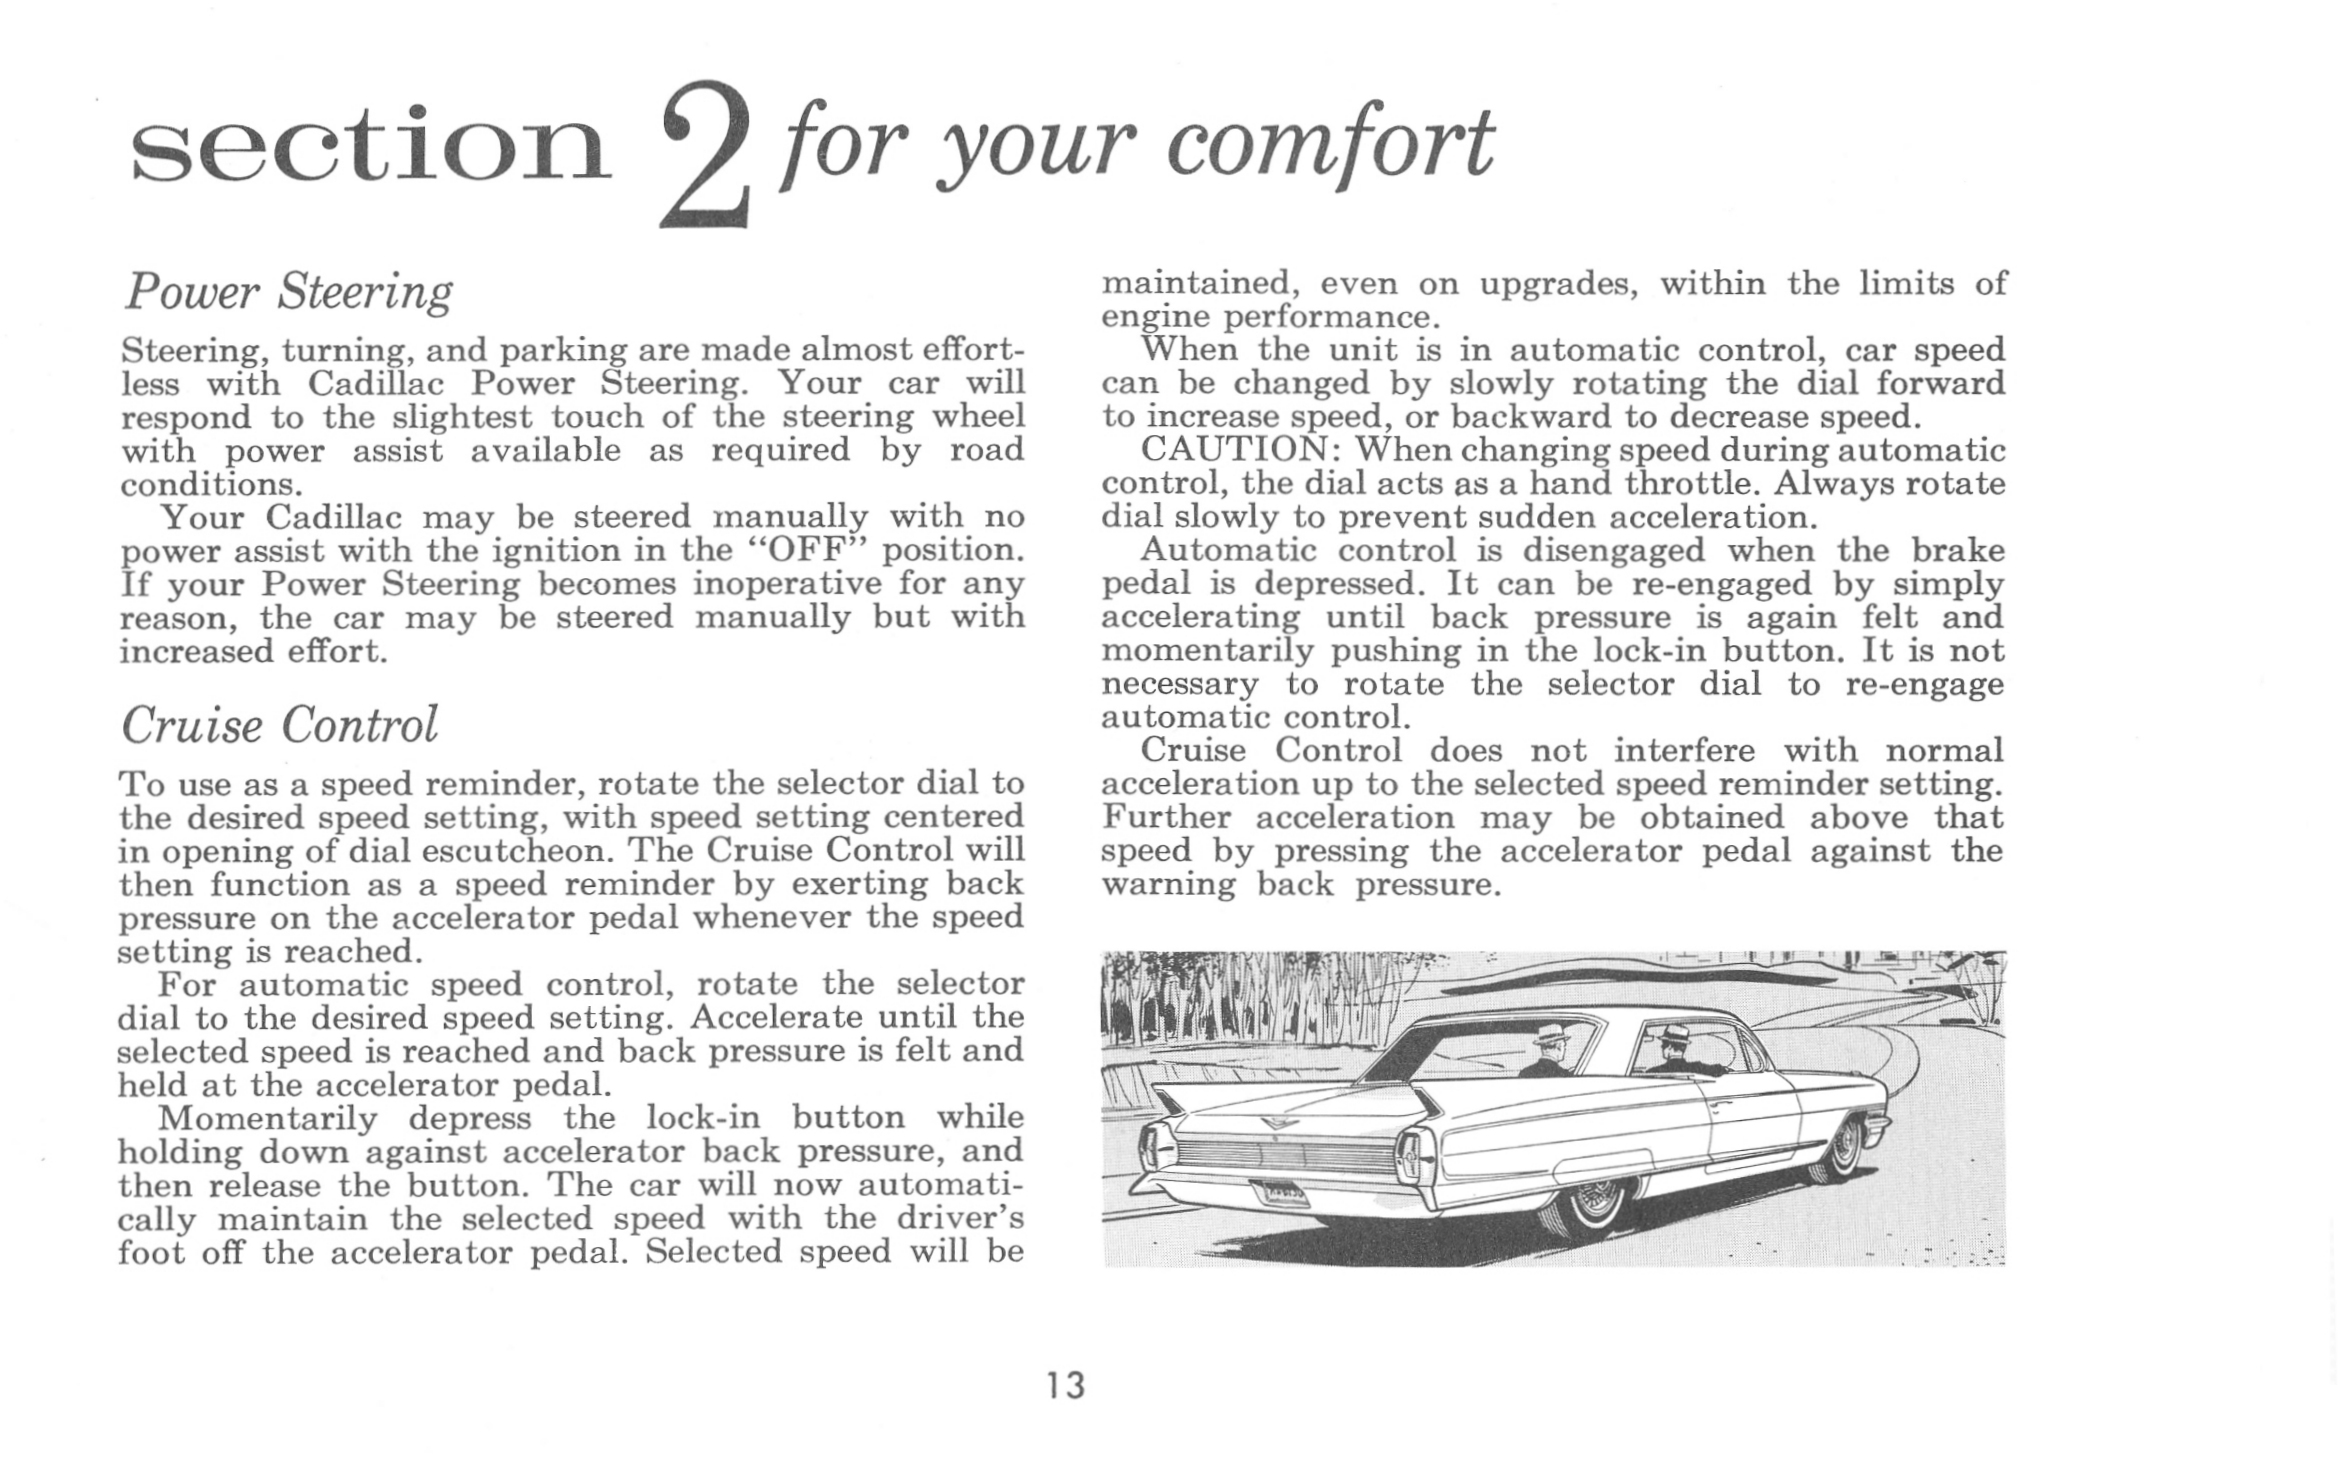 n_1962 Cadillac Owner's Manual-Page 13.jpg